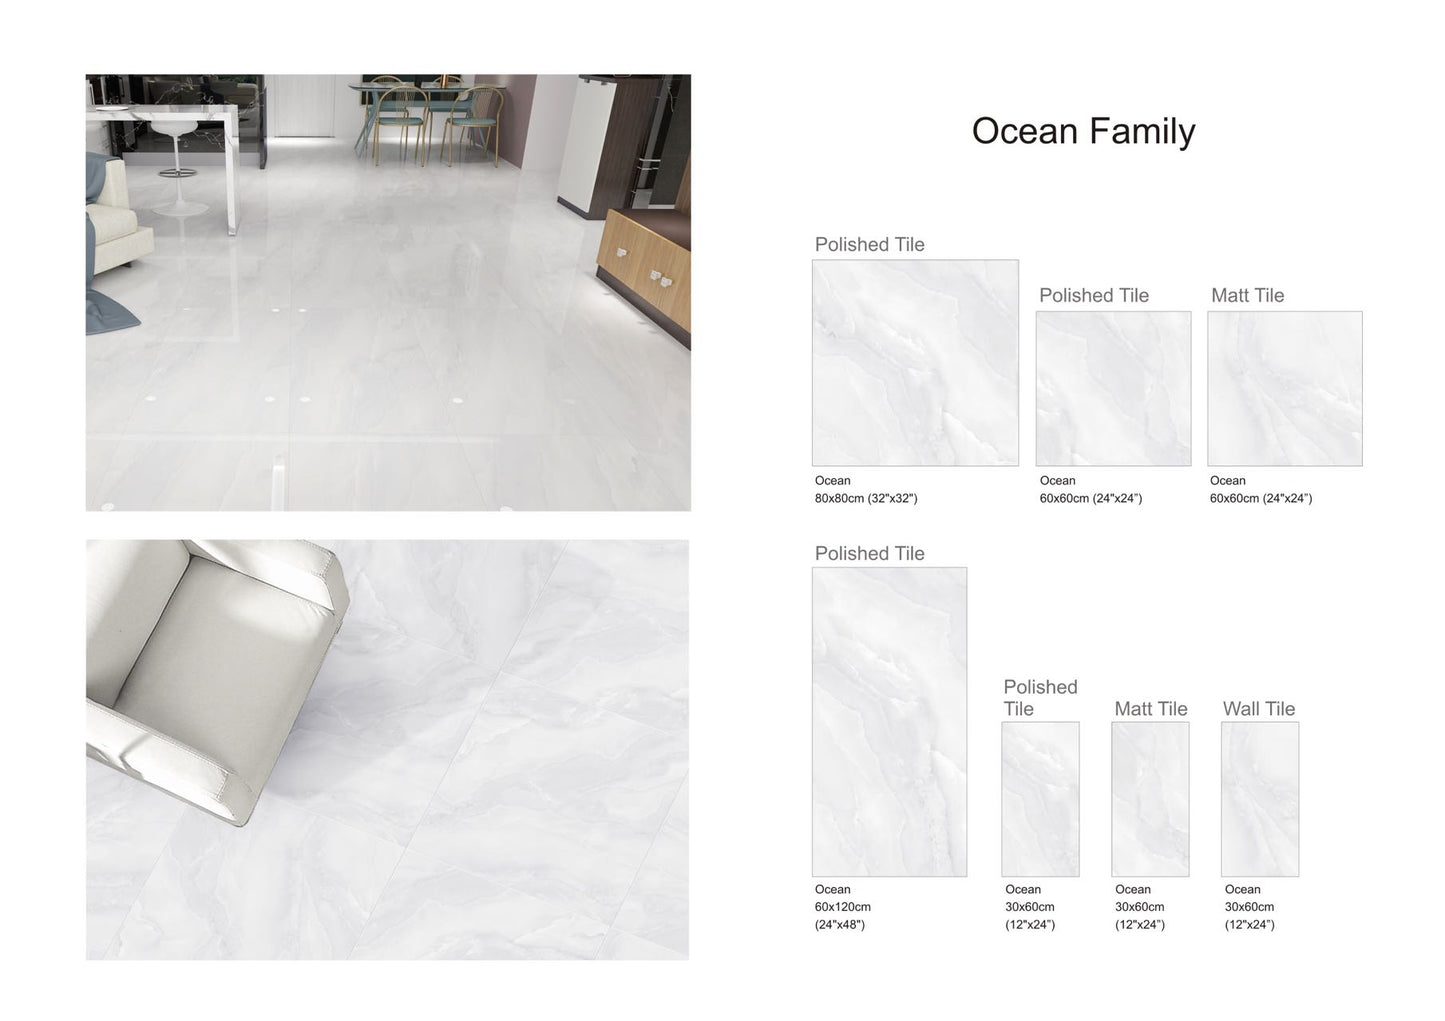 Ocean family Matt Tile light gray 12"x24" 8pcs/box 16sf/box $23.84/box $1.49/sf 3000SF+ $1.39/sf